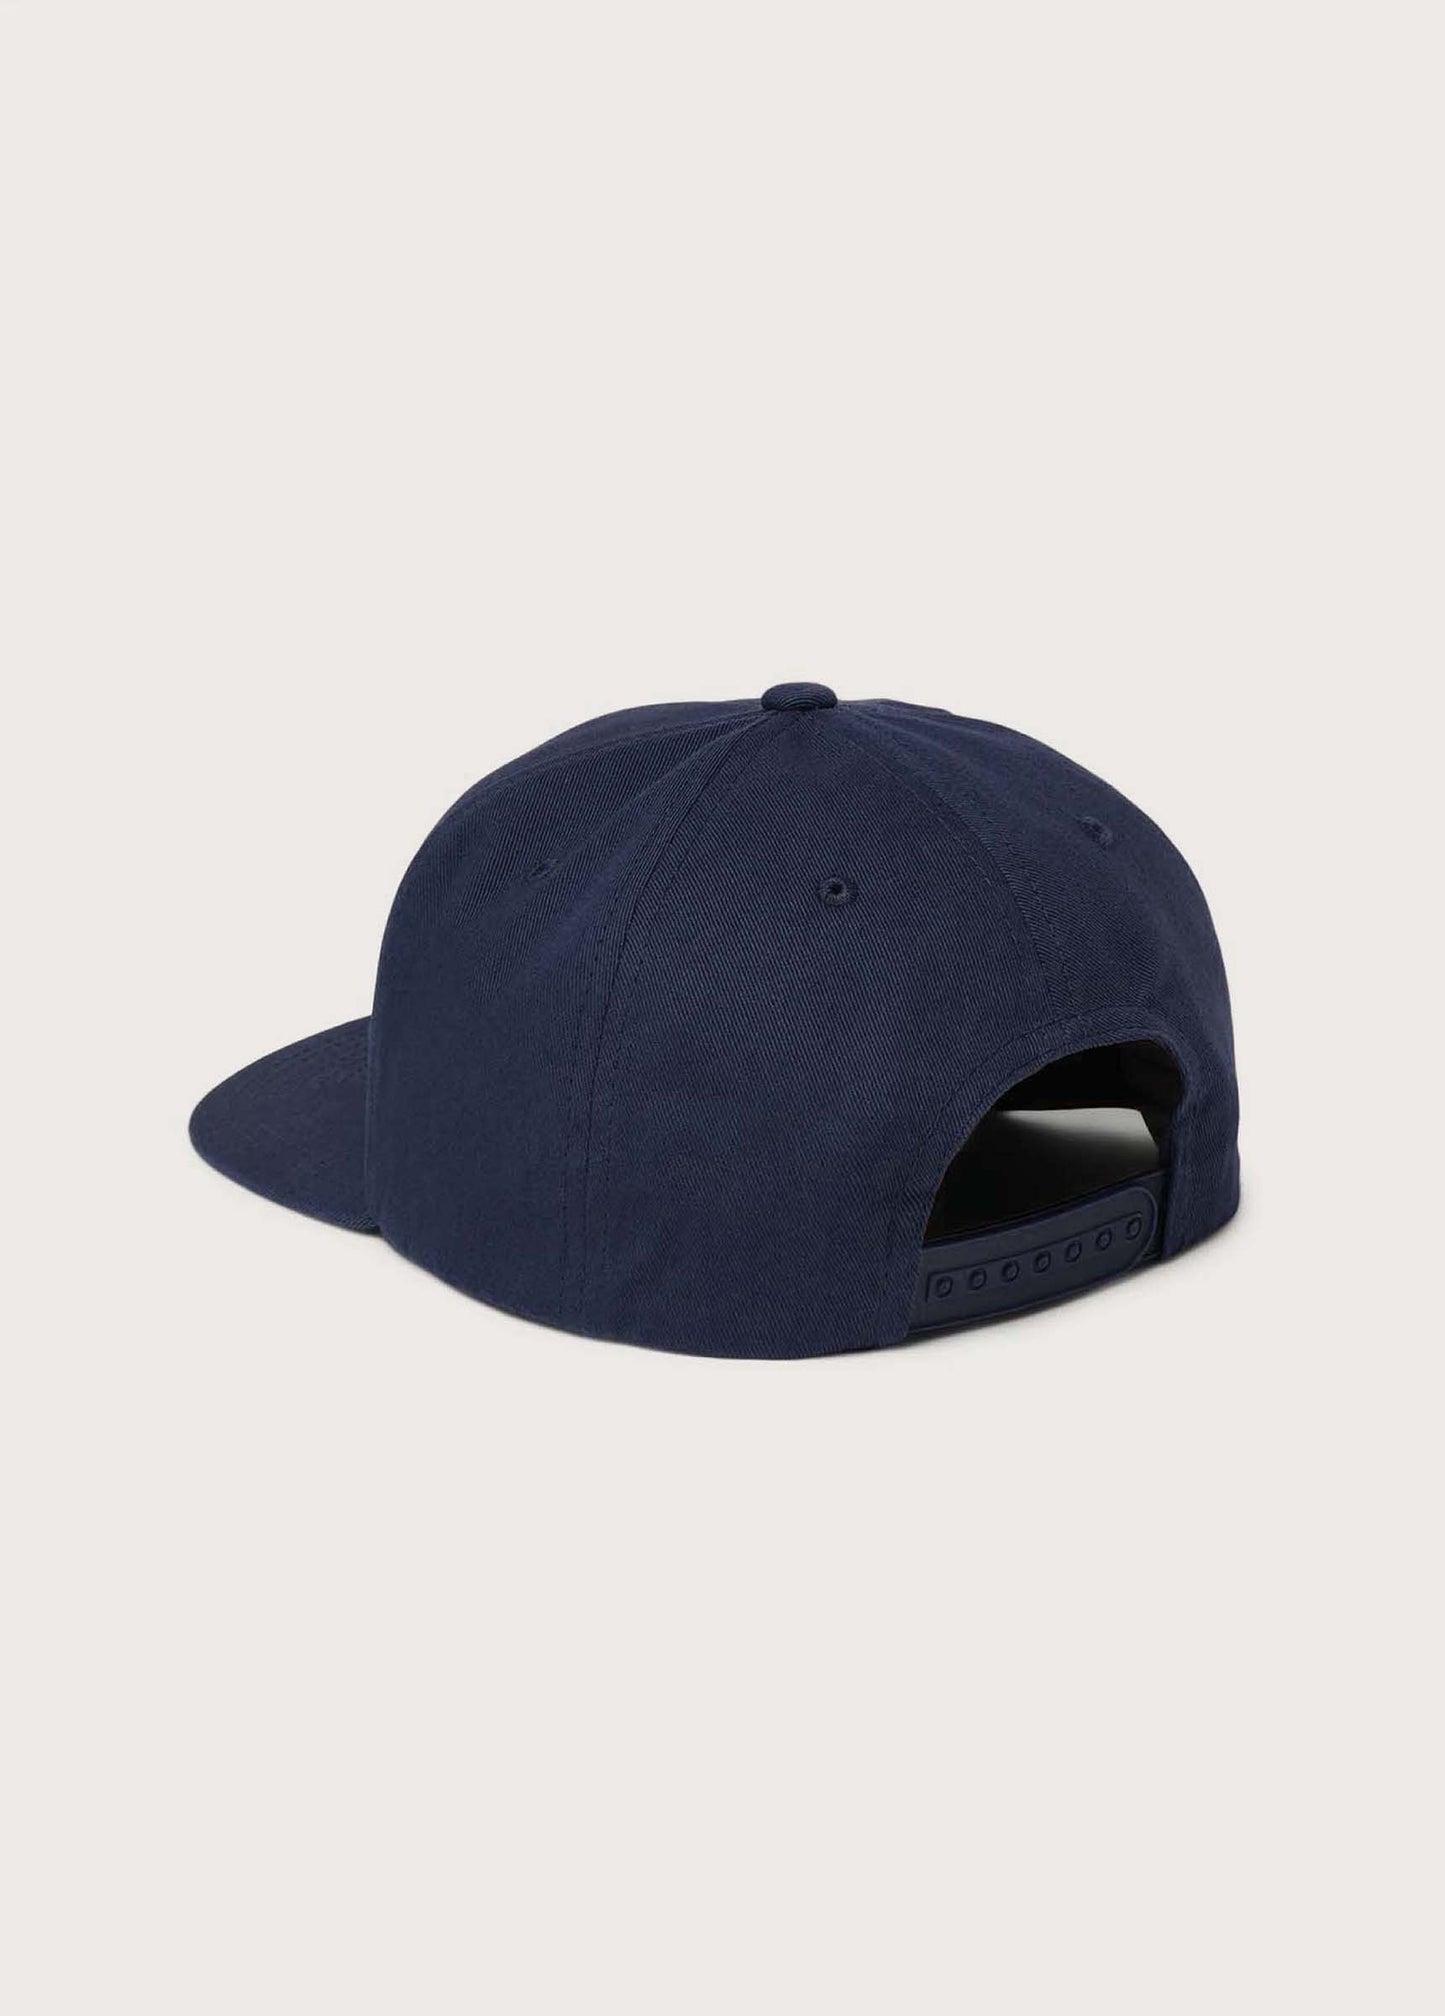 Northern Sky Hat | Navy